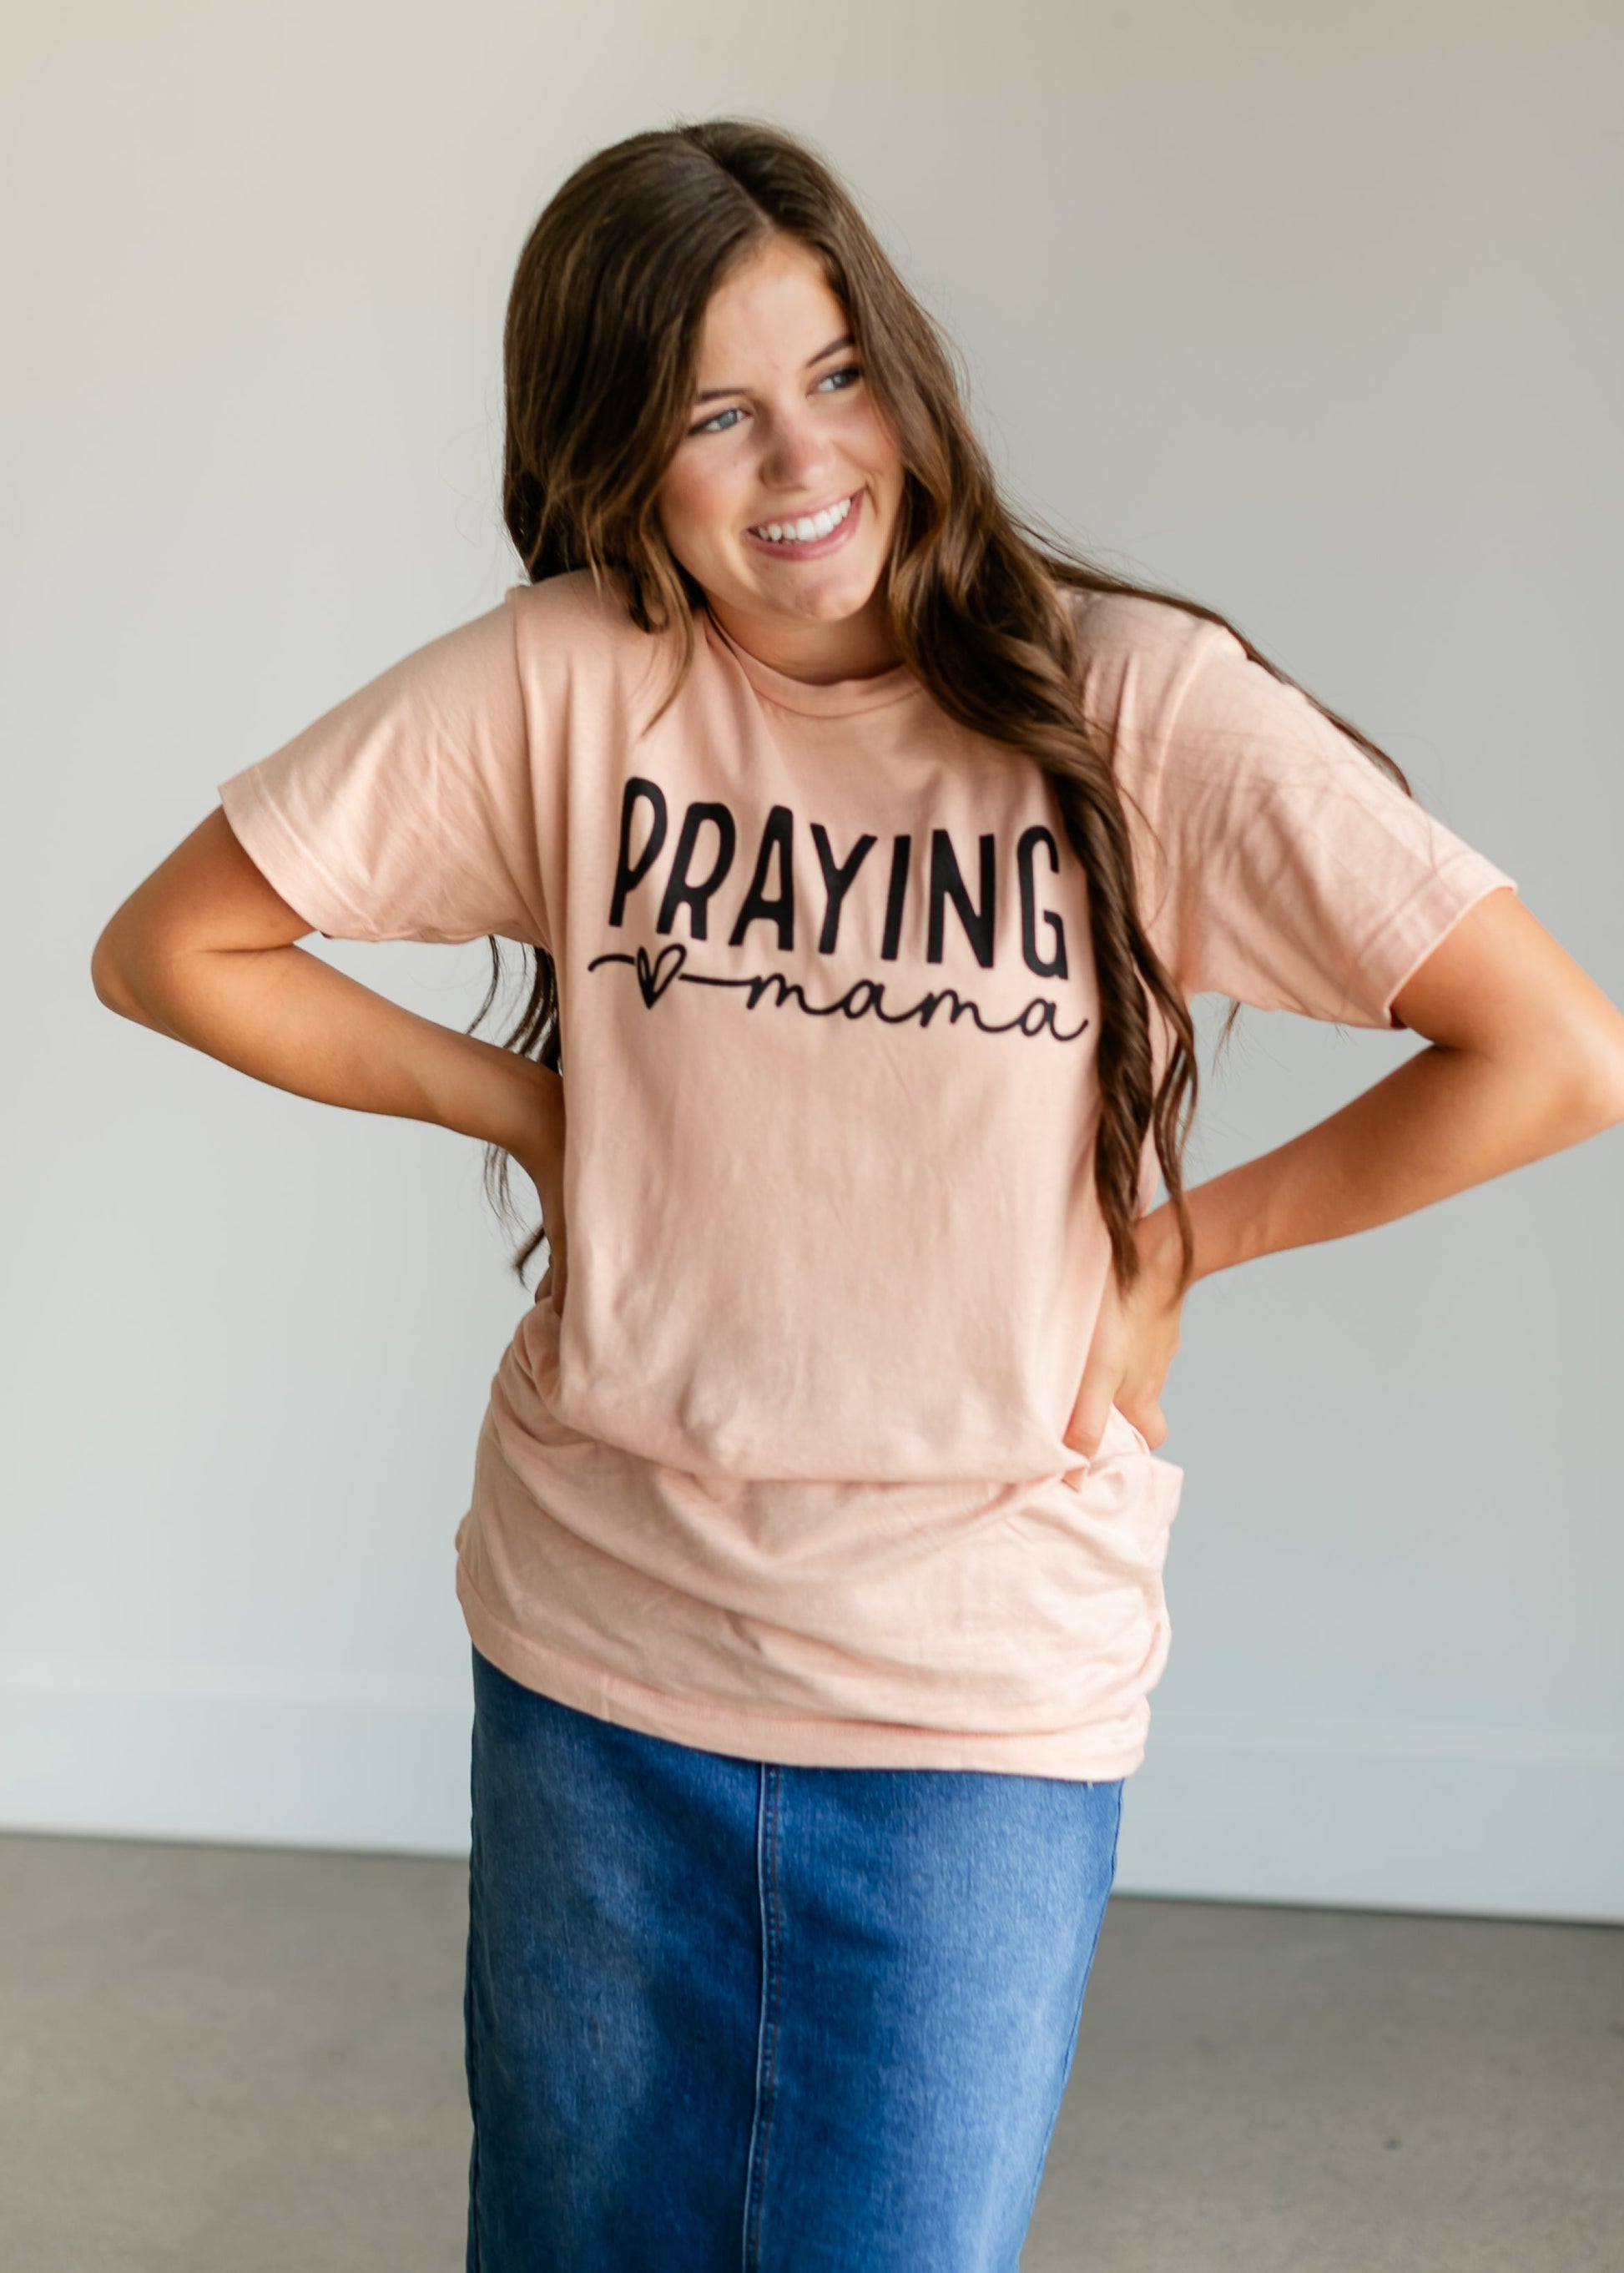 Praying Mama Graphic T-shirt FF Tops